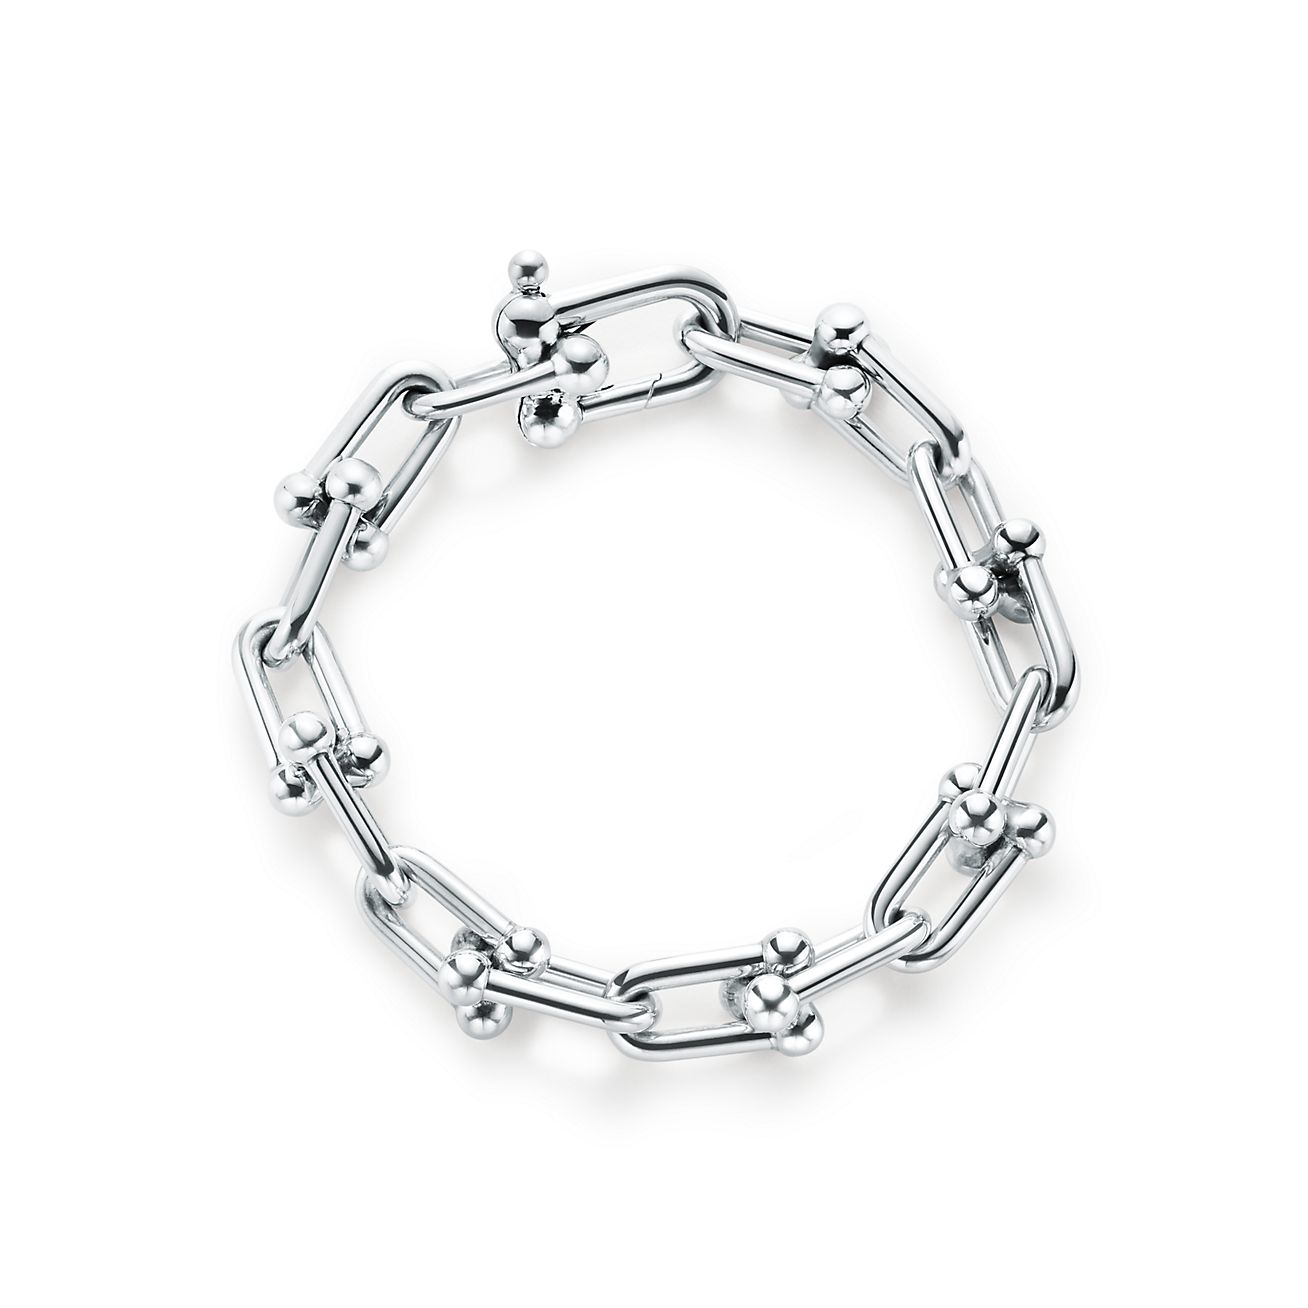 Details about   925 Silver Bracelet Chunky Link Design